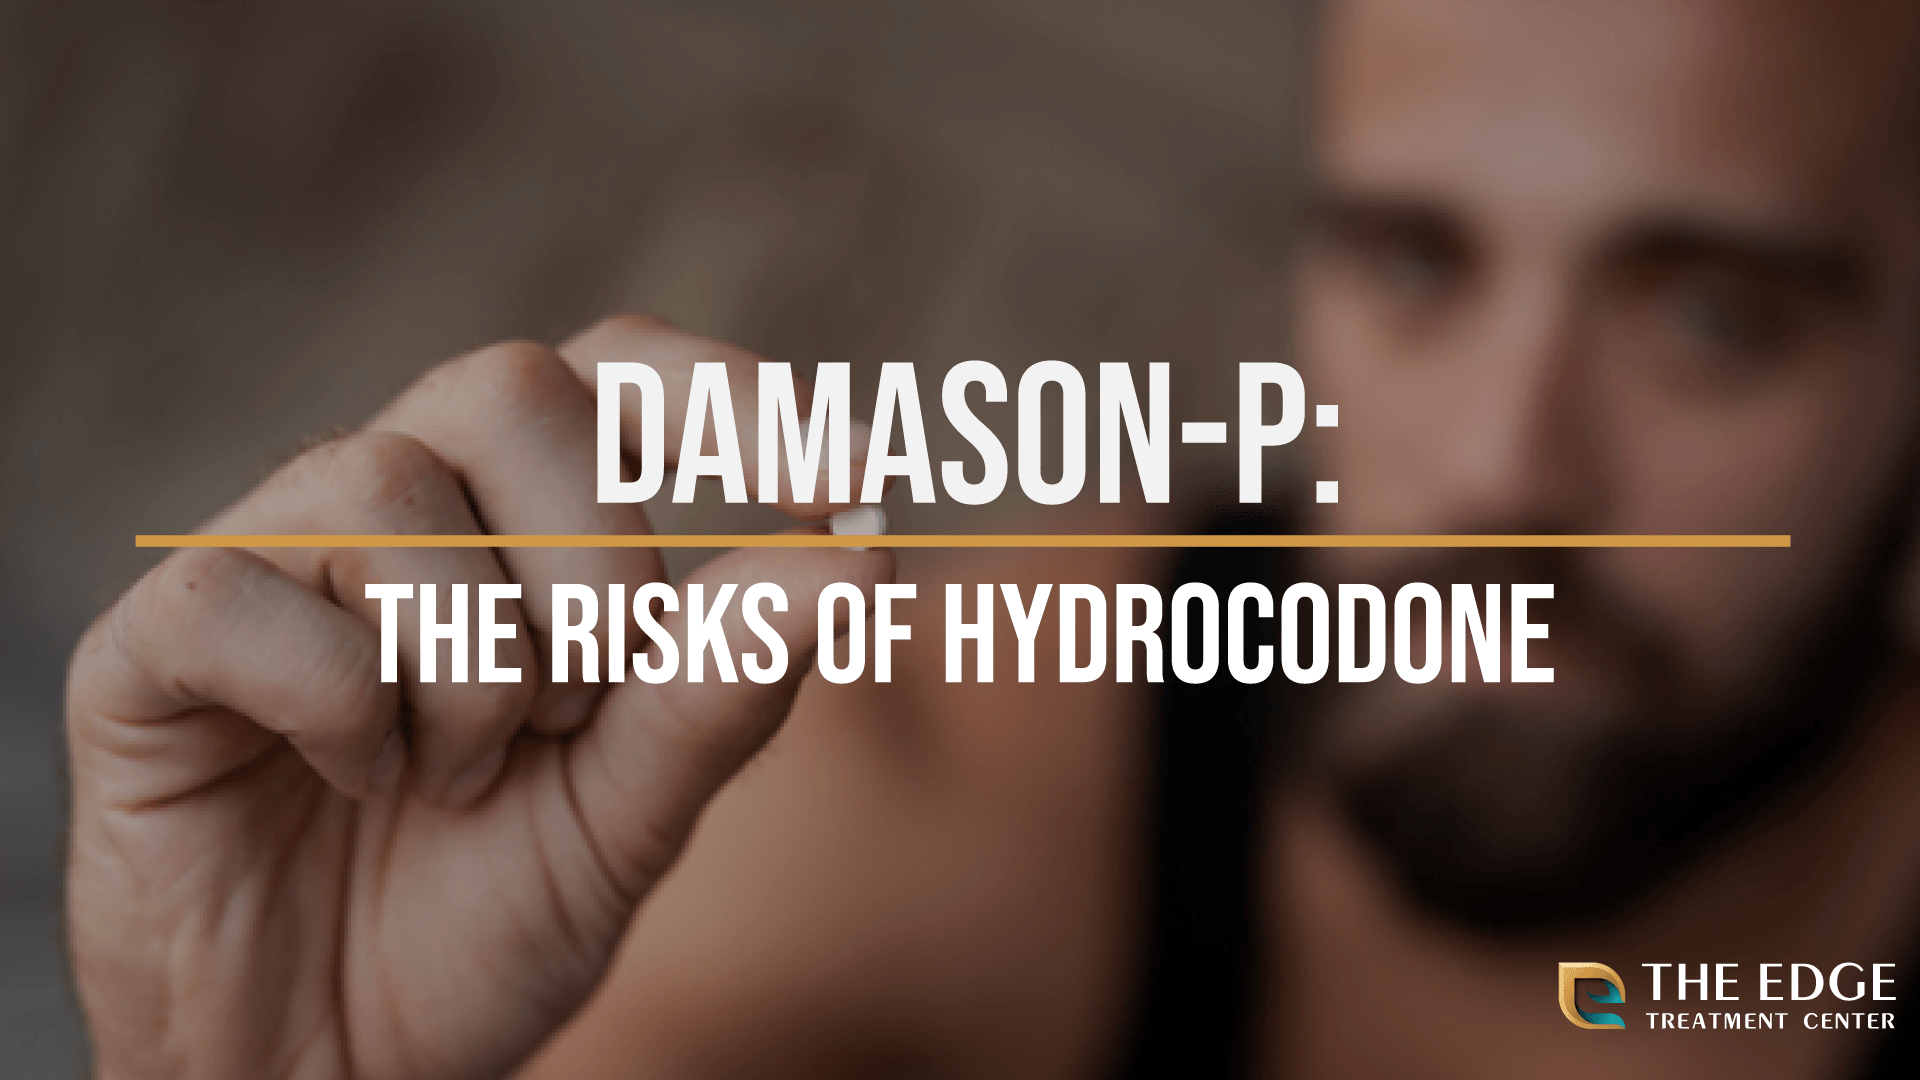 What is Damason-P?